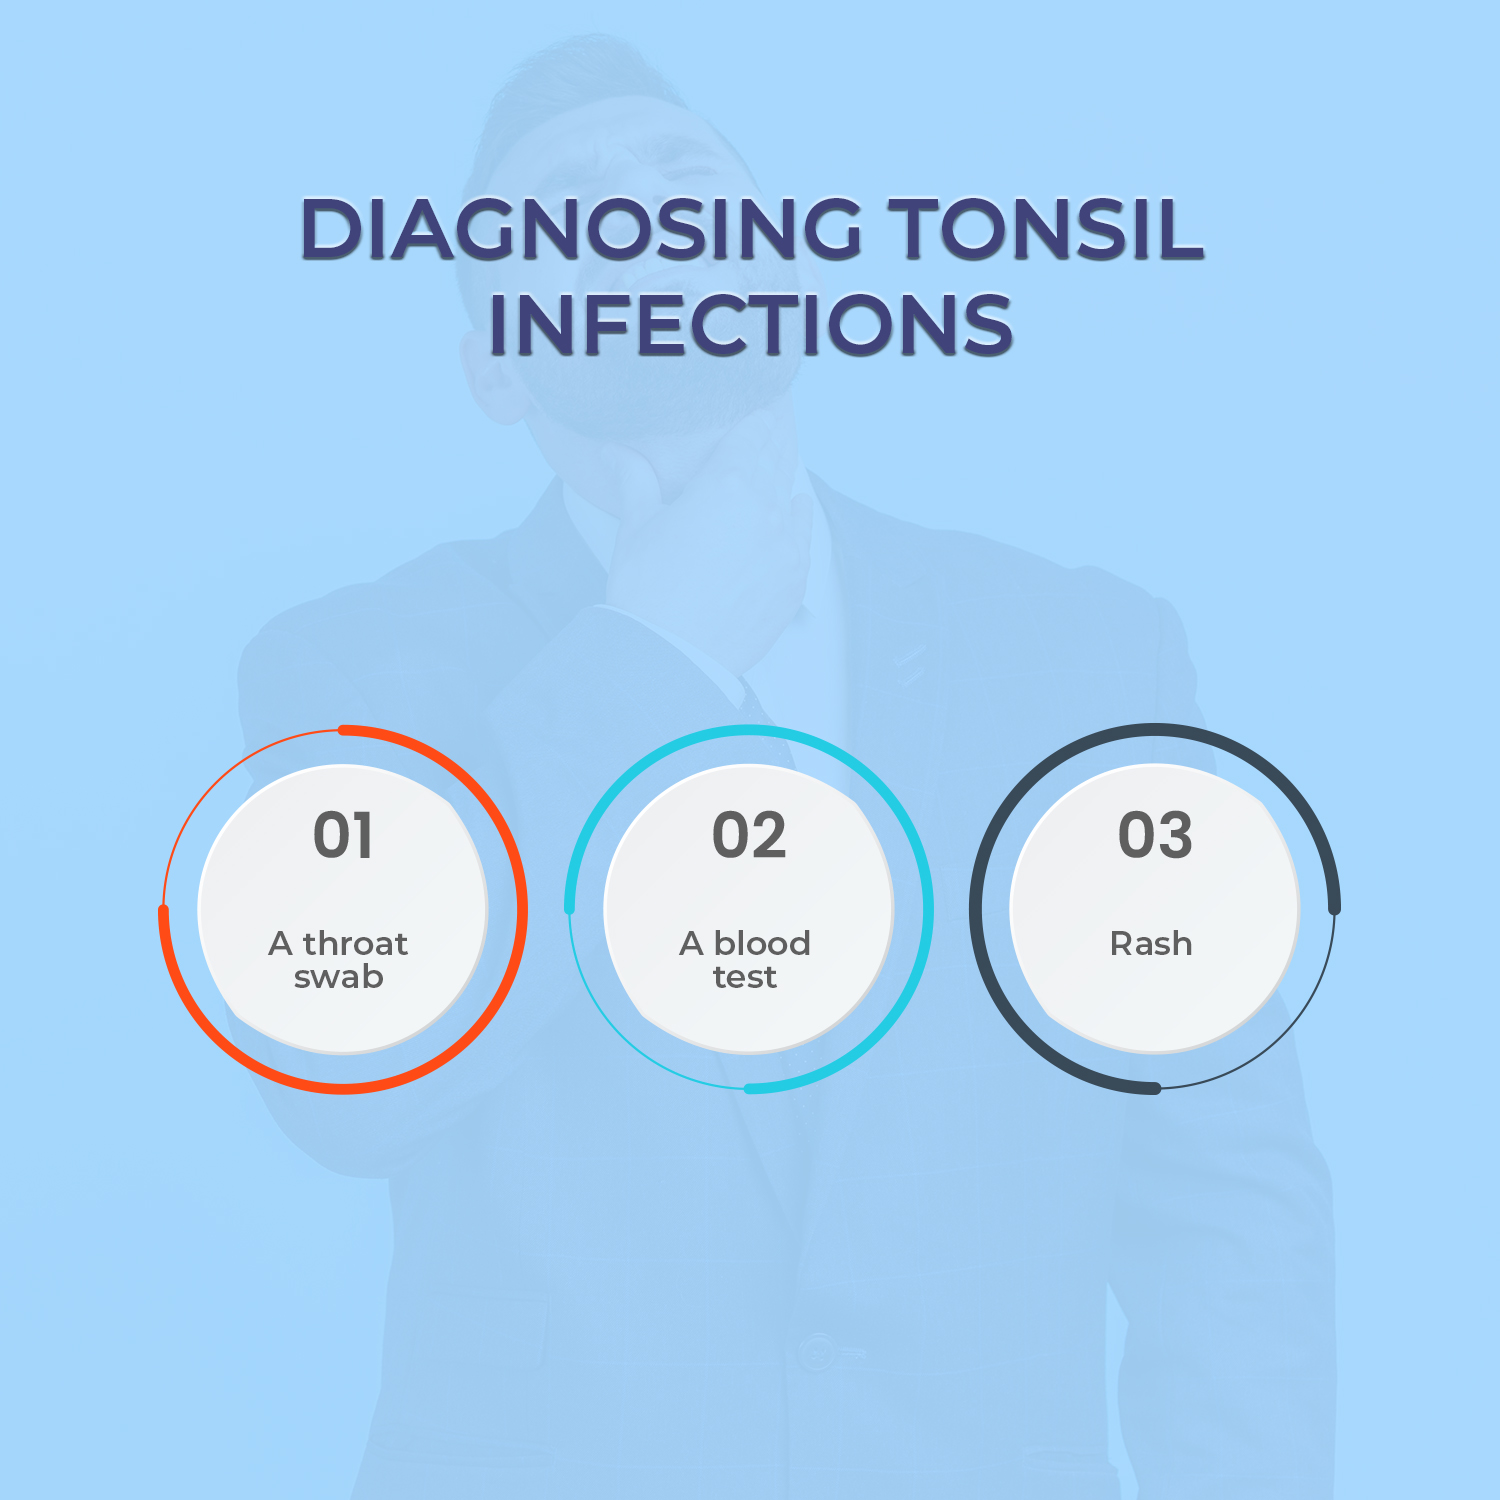 Diagnosing Tonsil Infections